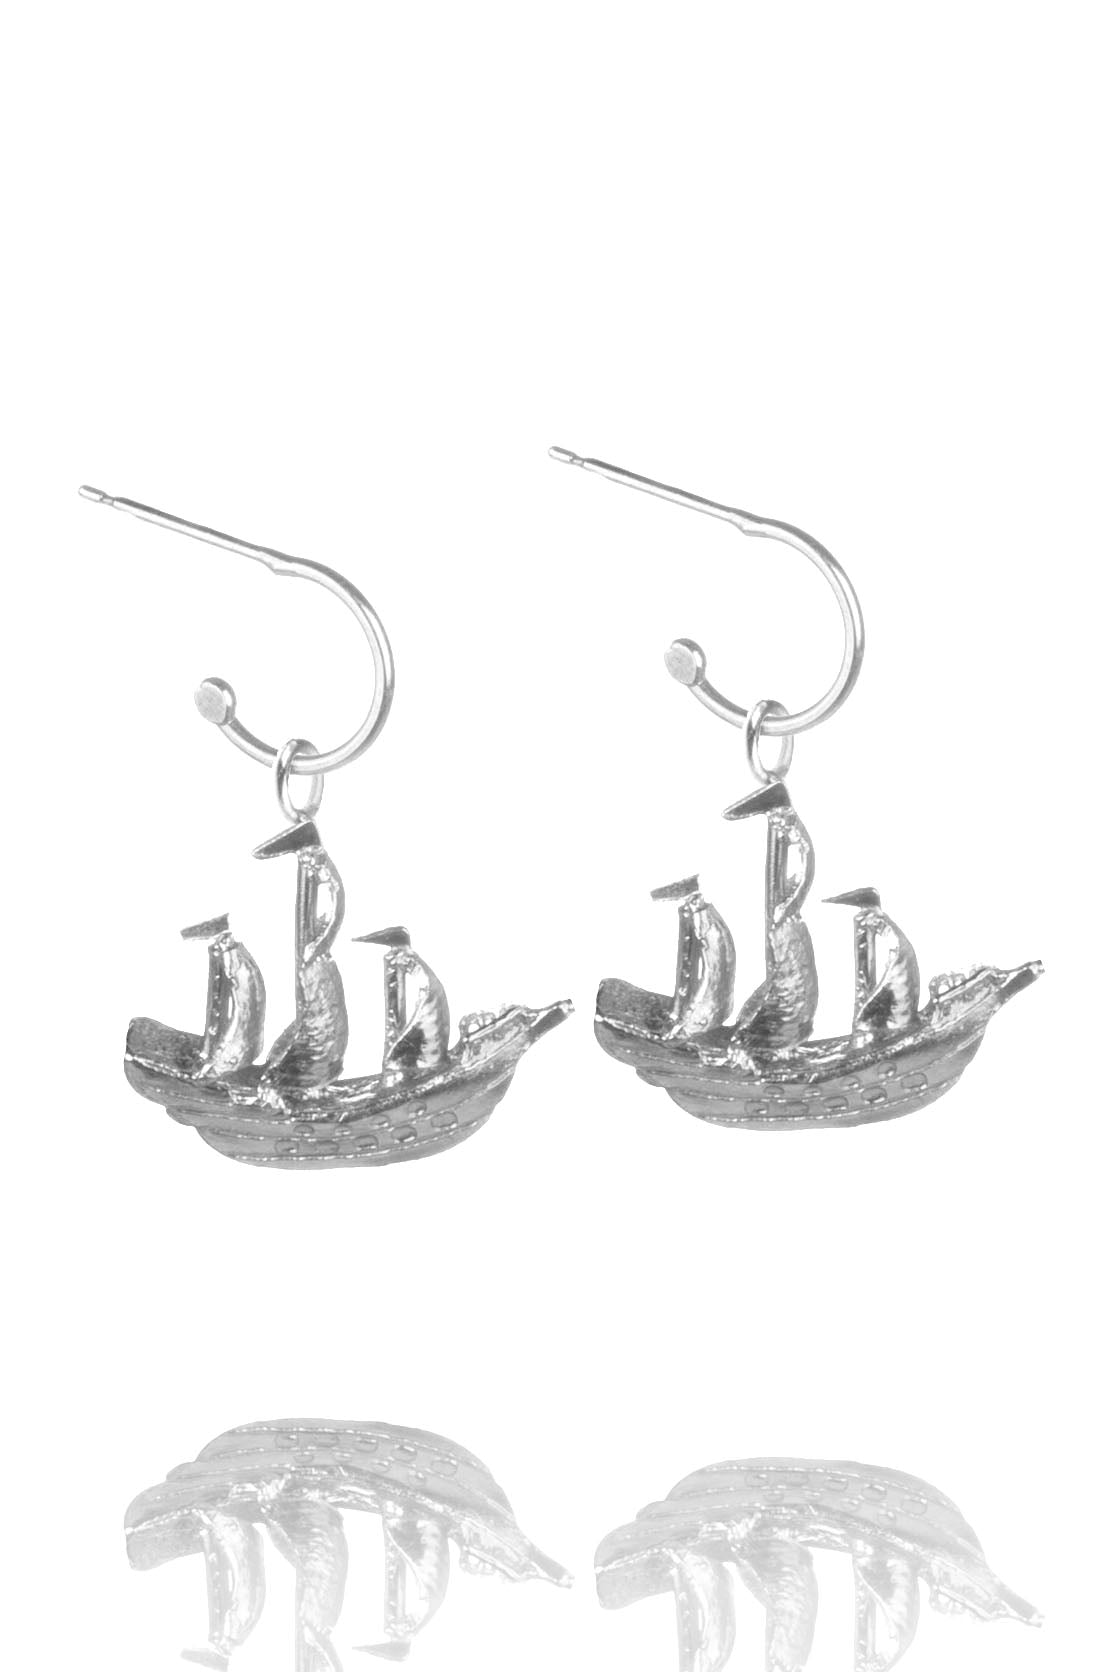 Solid sterling silver handmade galleon earrings